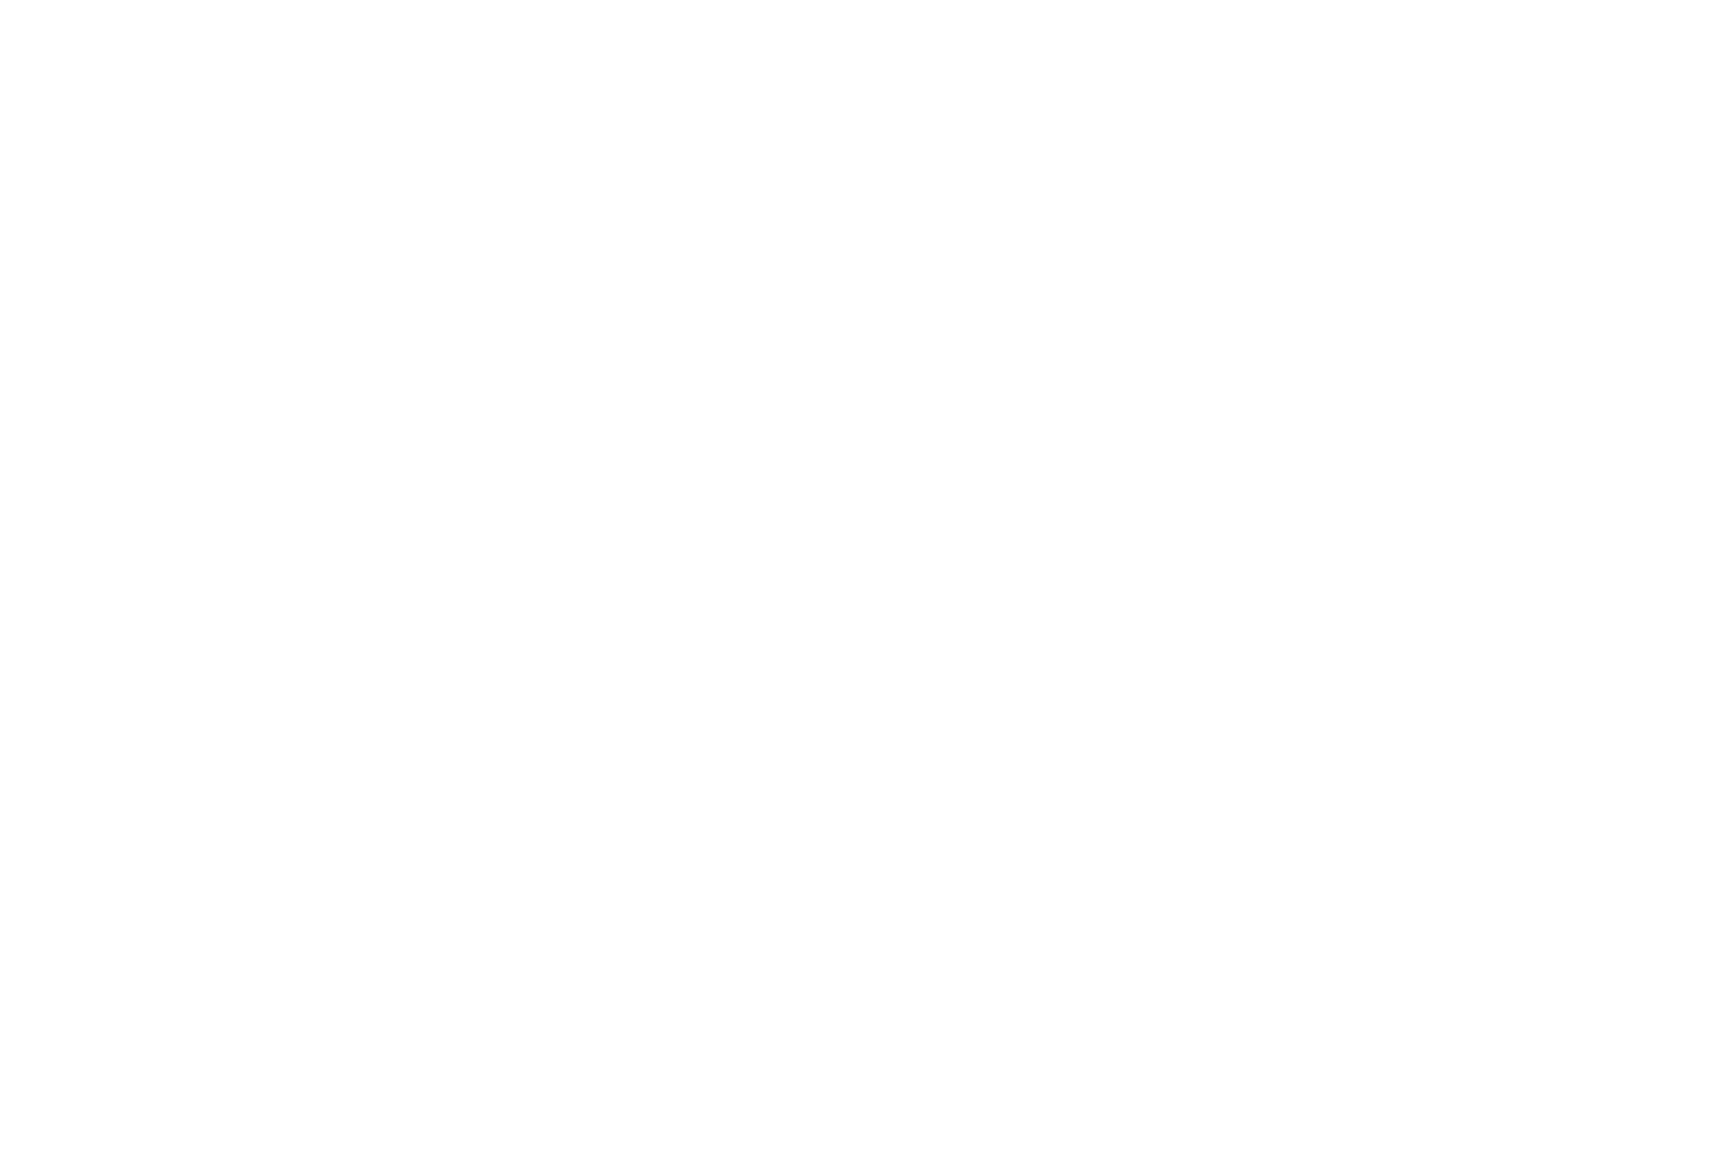 BEST DIRECTOR NOMINEE - International Christian Film Music Festival - 2019